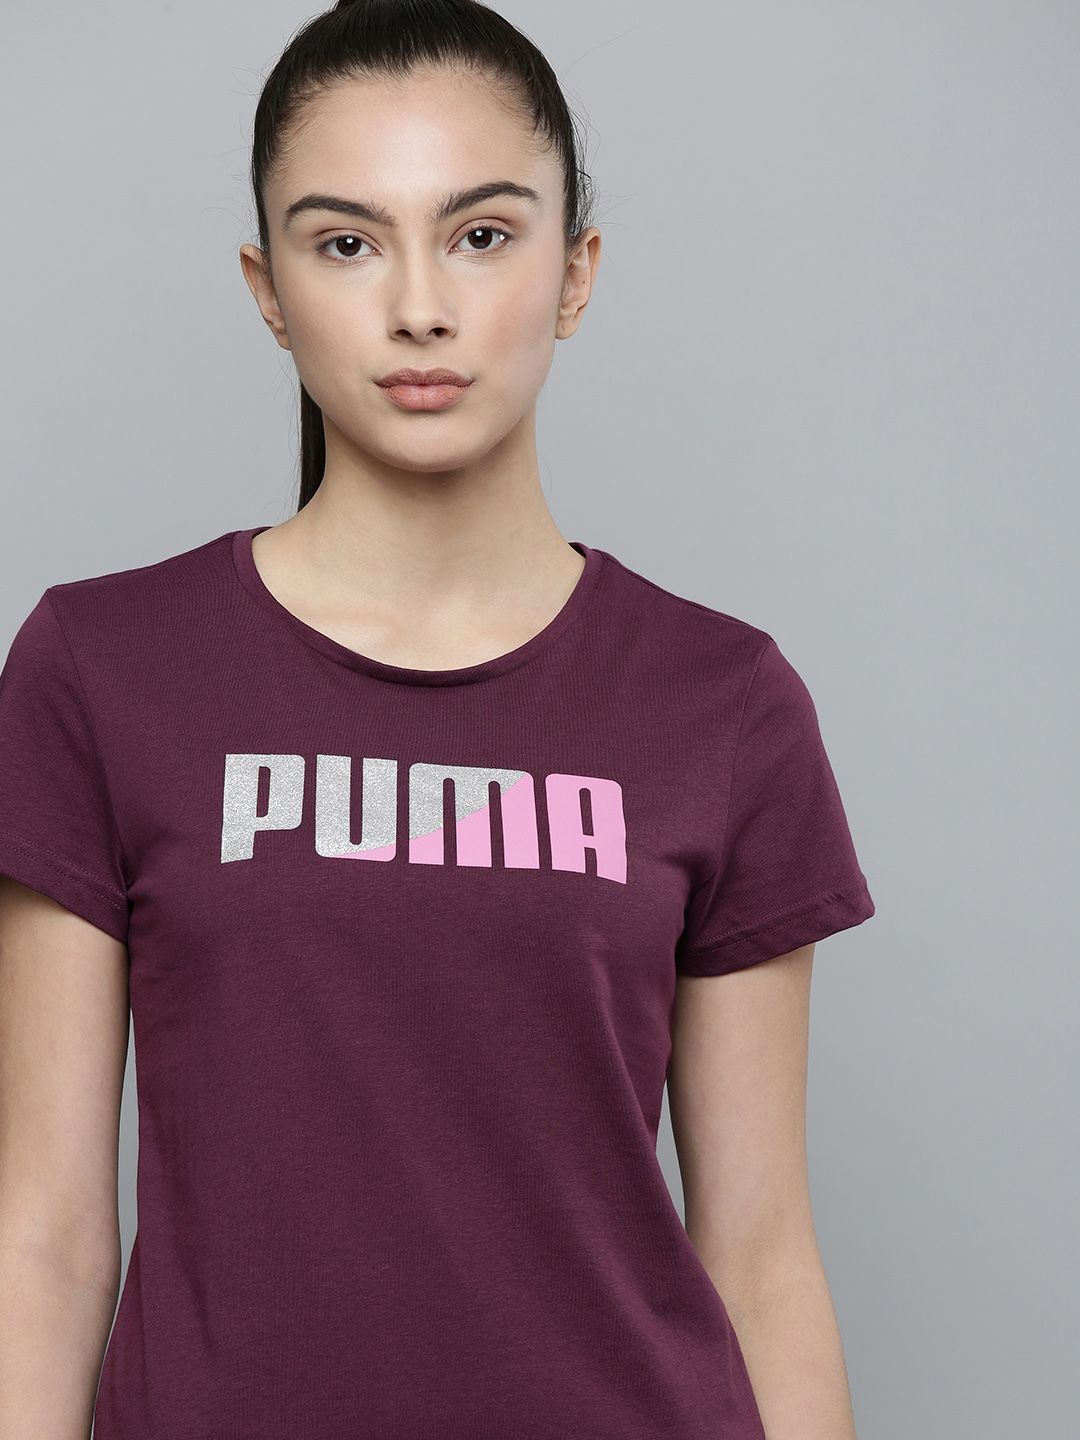 Puma Women Purple Brand Logo Printed T-shirt Price in India